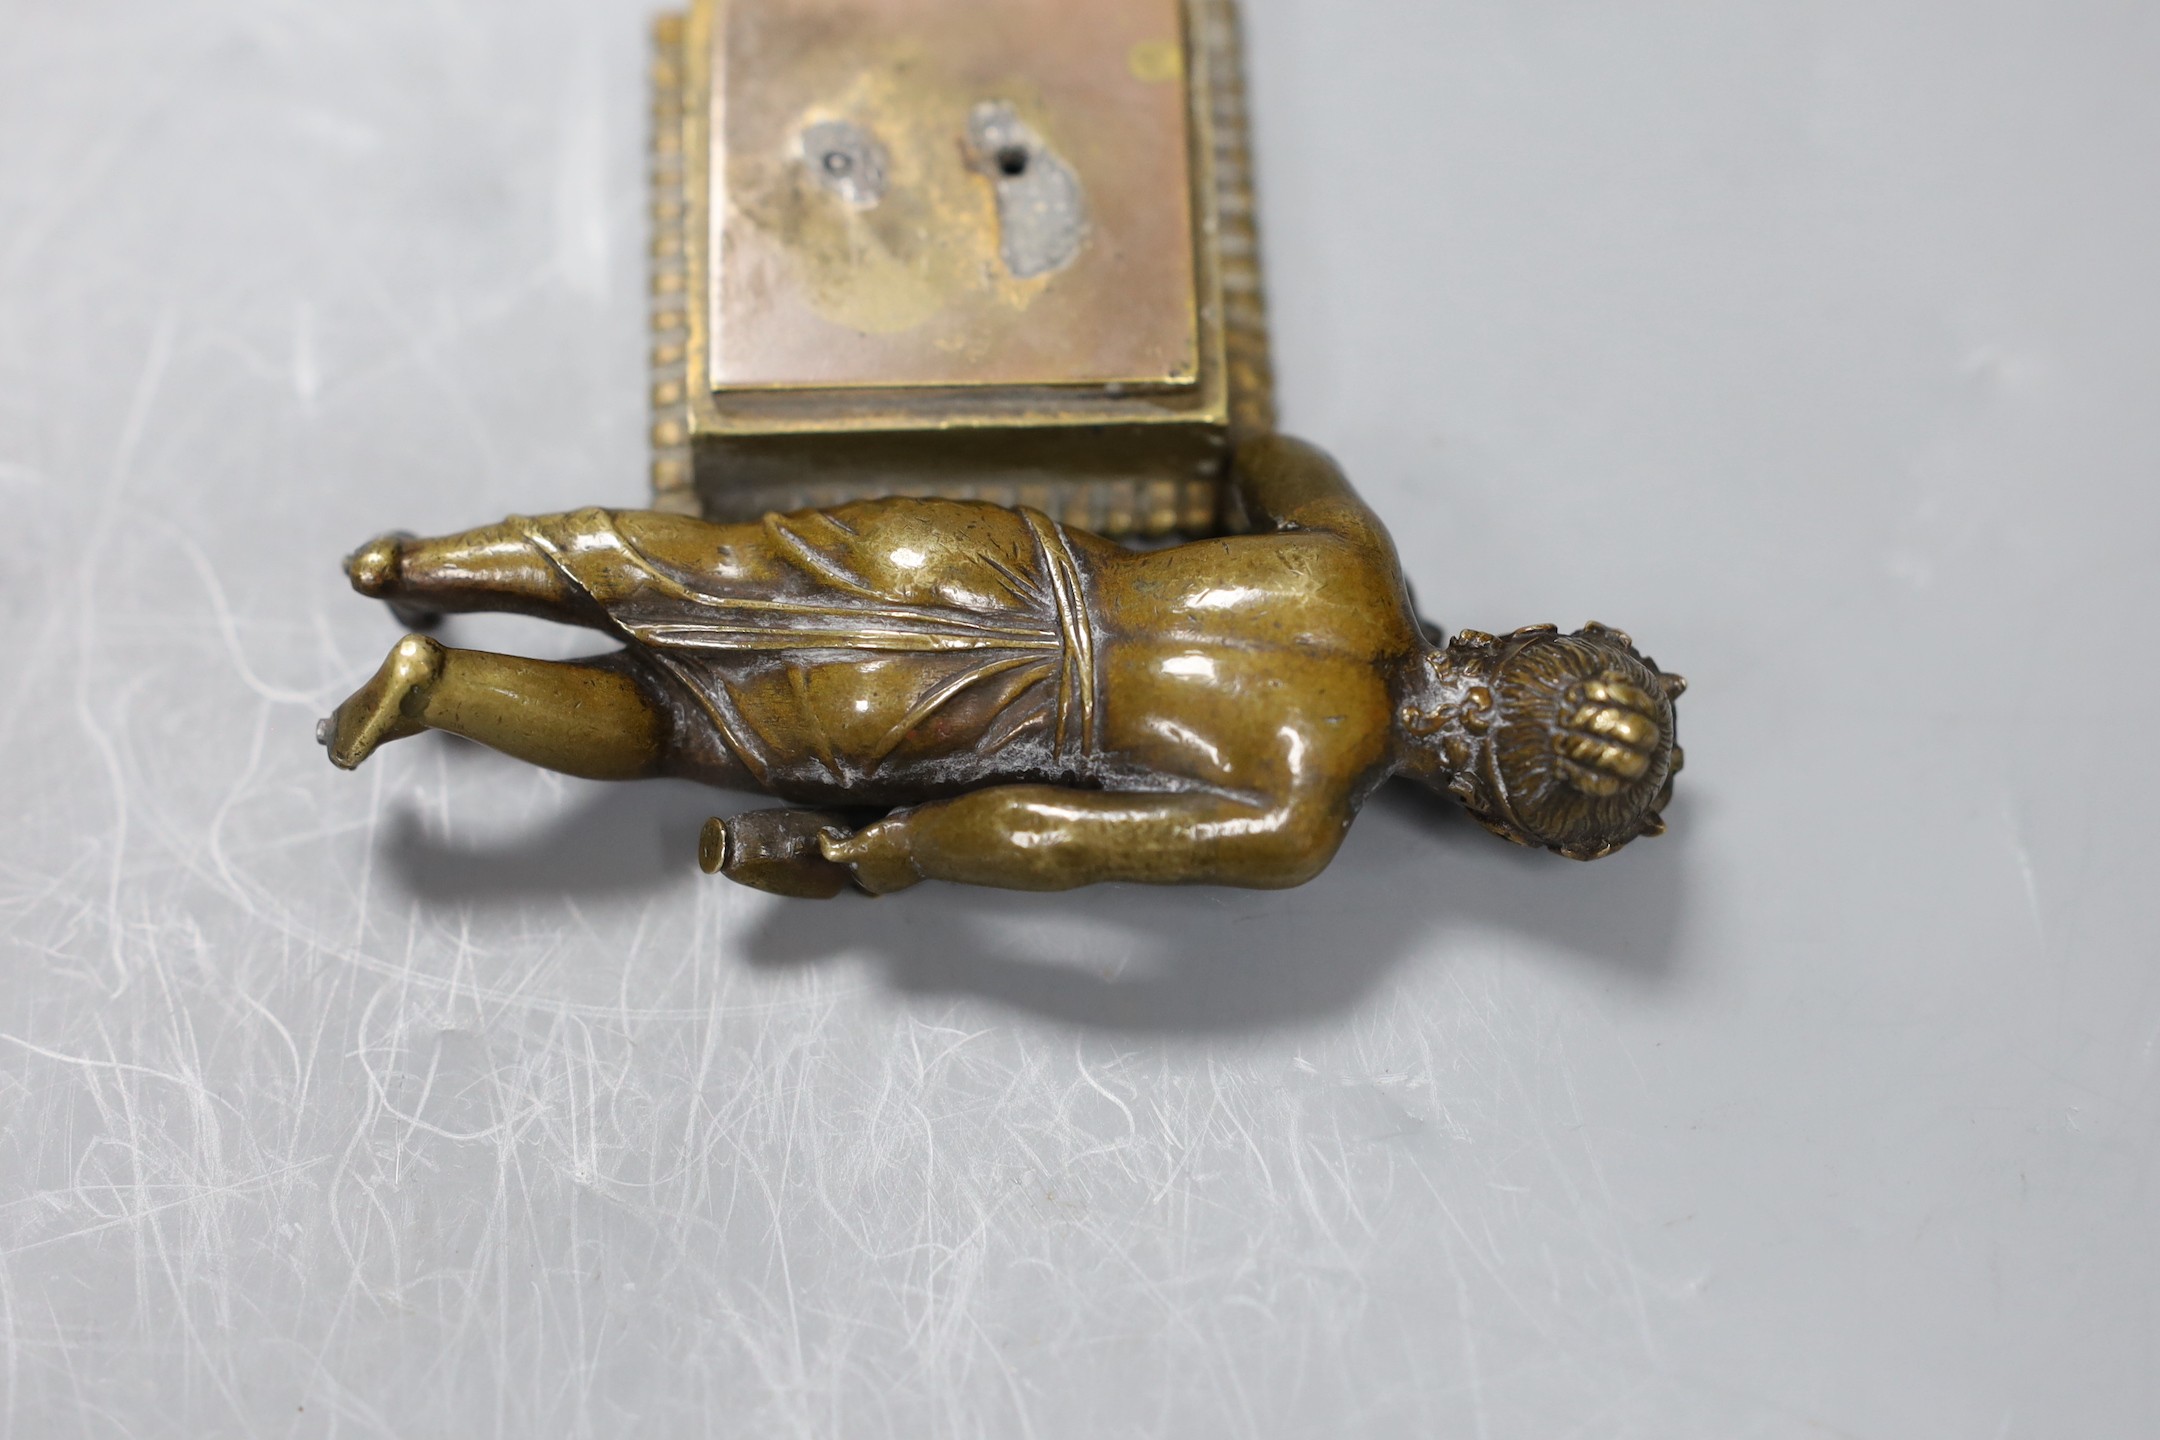 A 19th century Grand Tour souvenir bronze figure a Bacchanlian putti, 9cms high